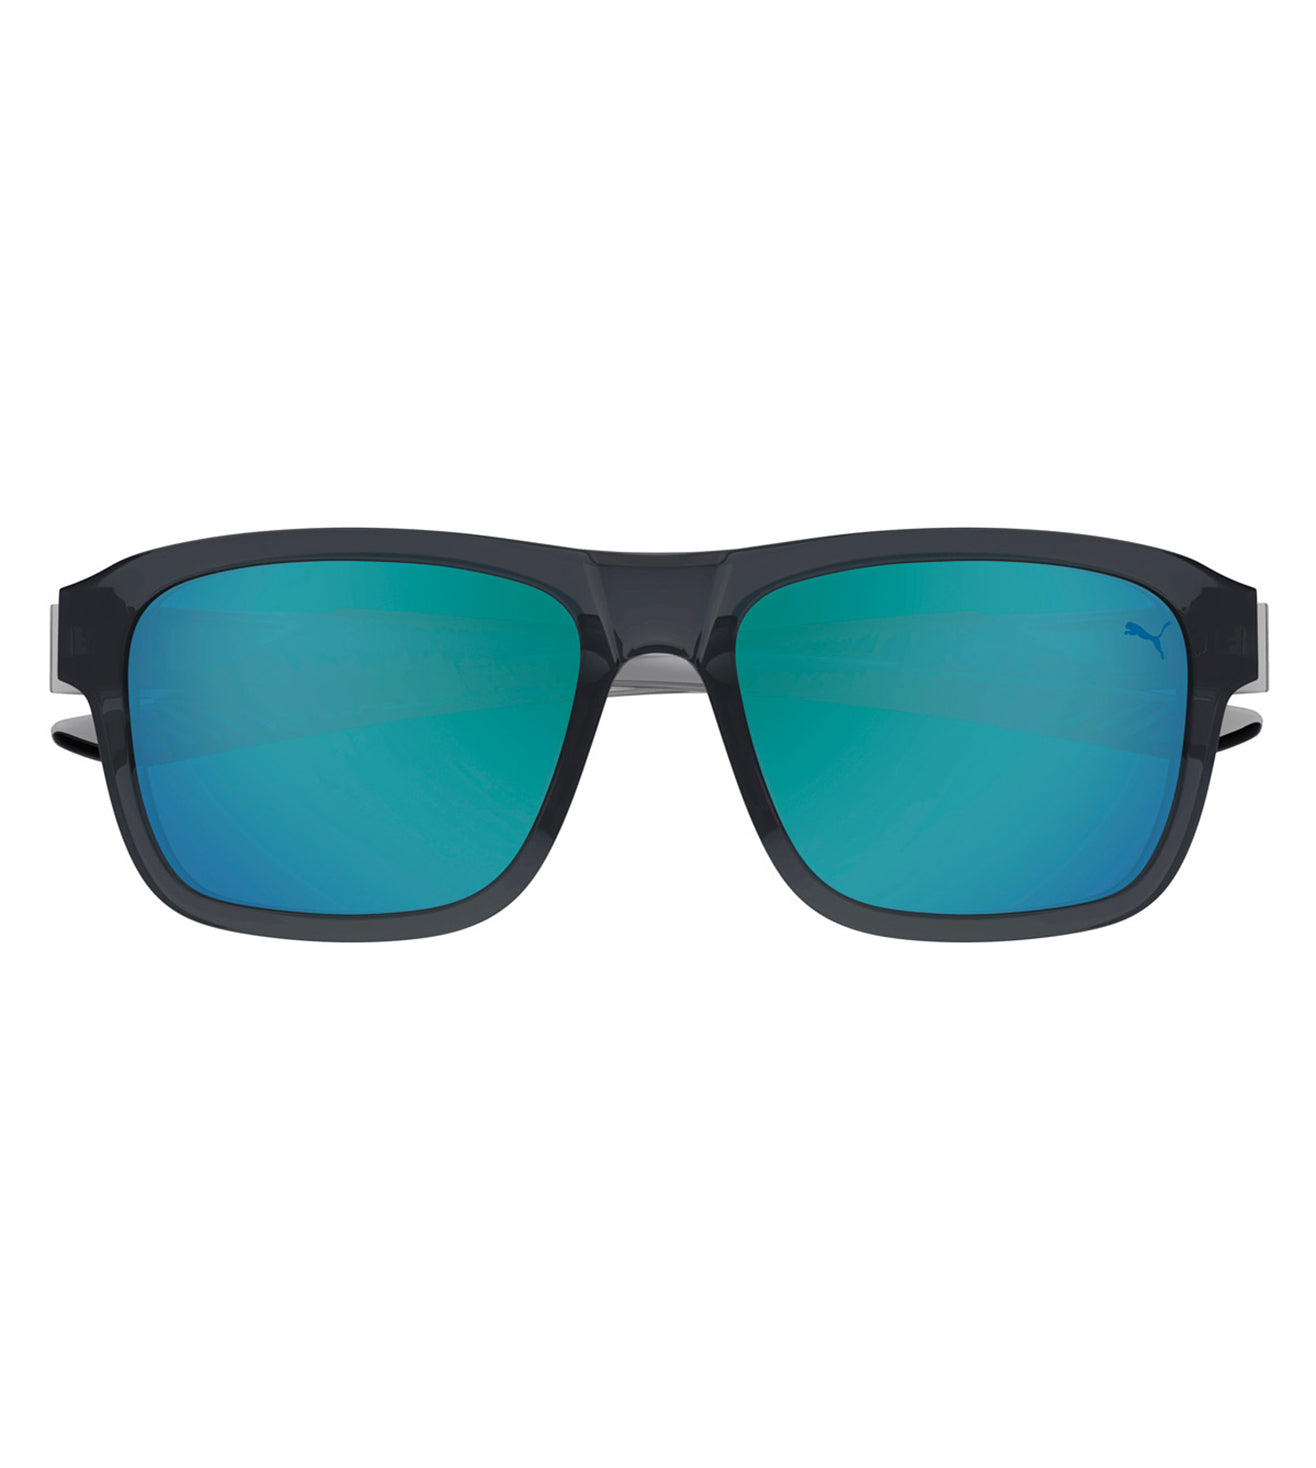 Puma Men's Blue Mirrored Polarized Rectangular Sunglasses